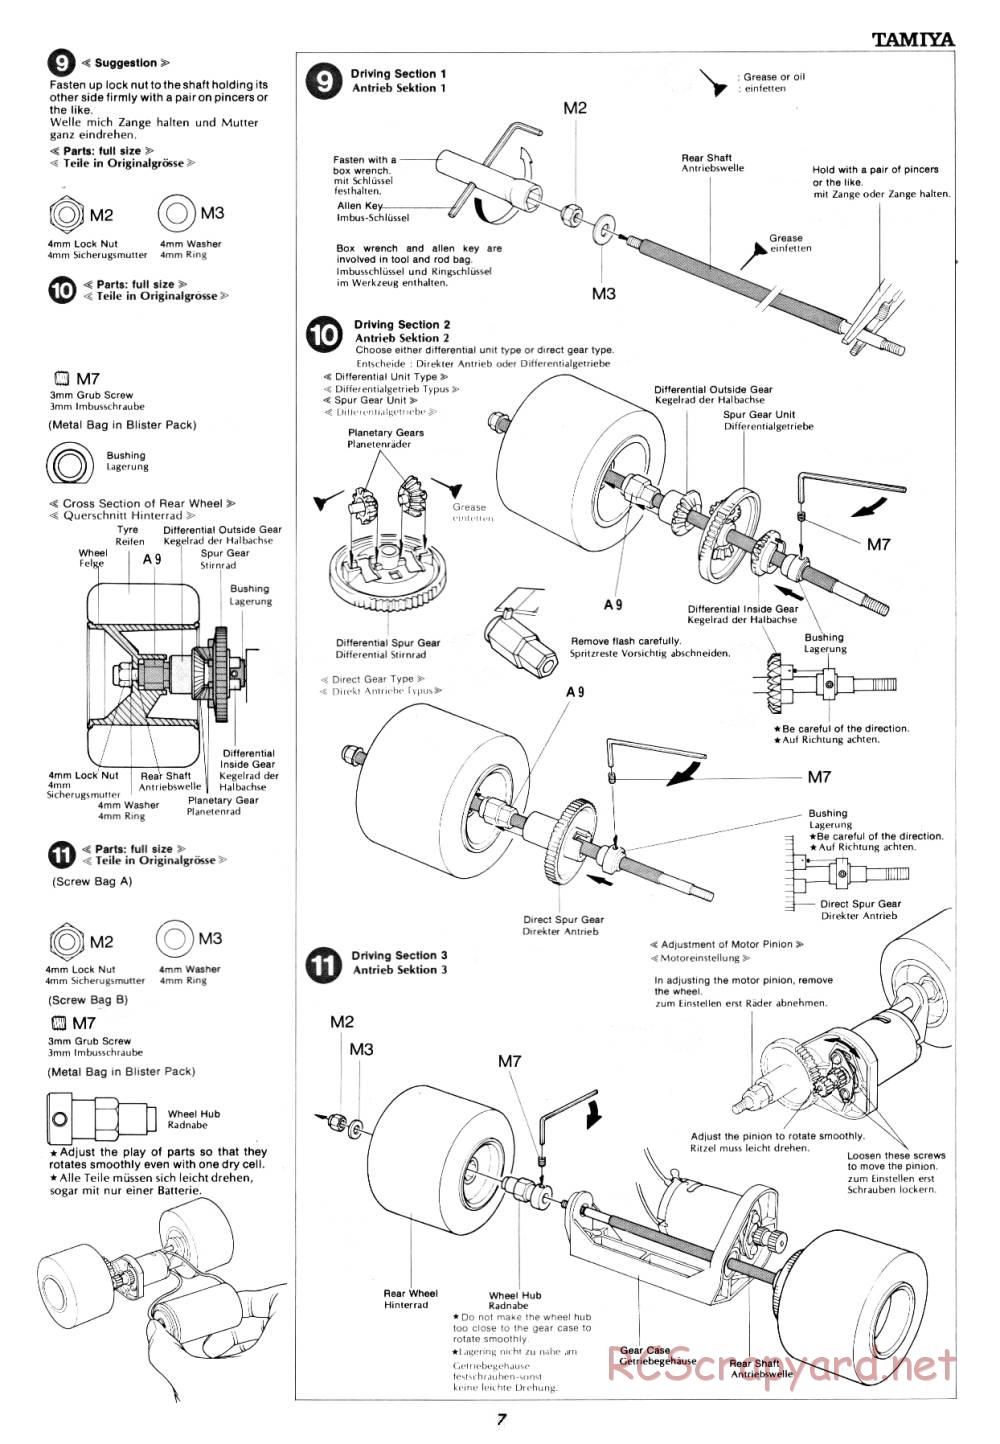 Tamiya - B2B Racing Sidecar - 58017 - Manual - Page 7